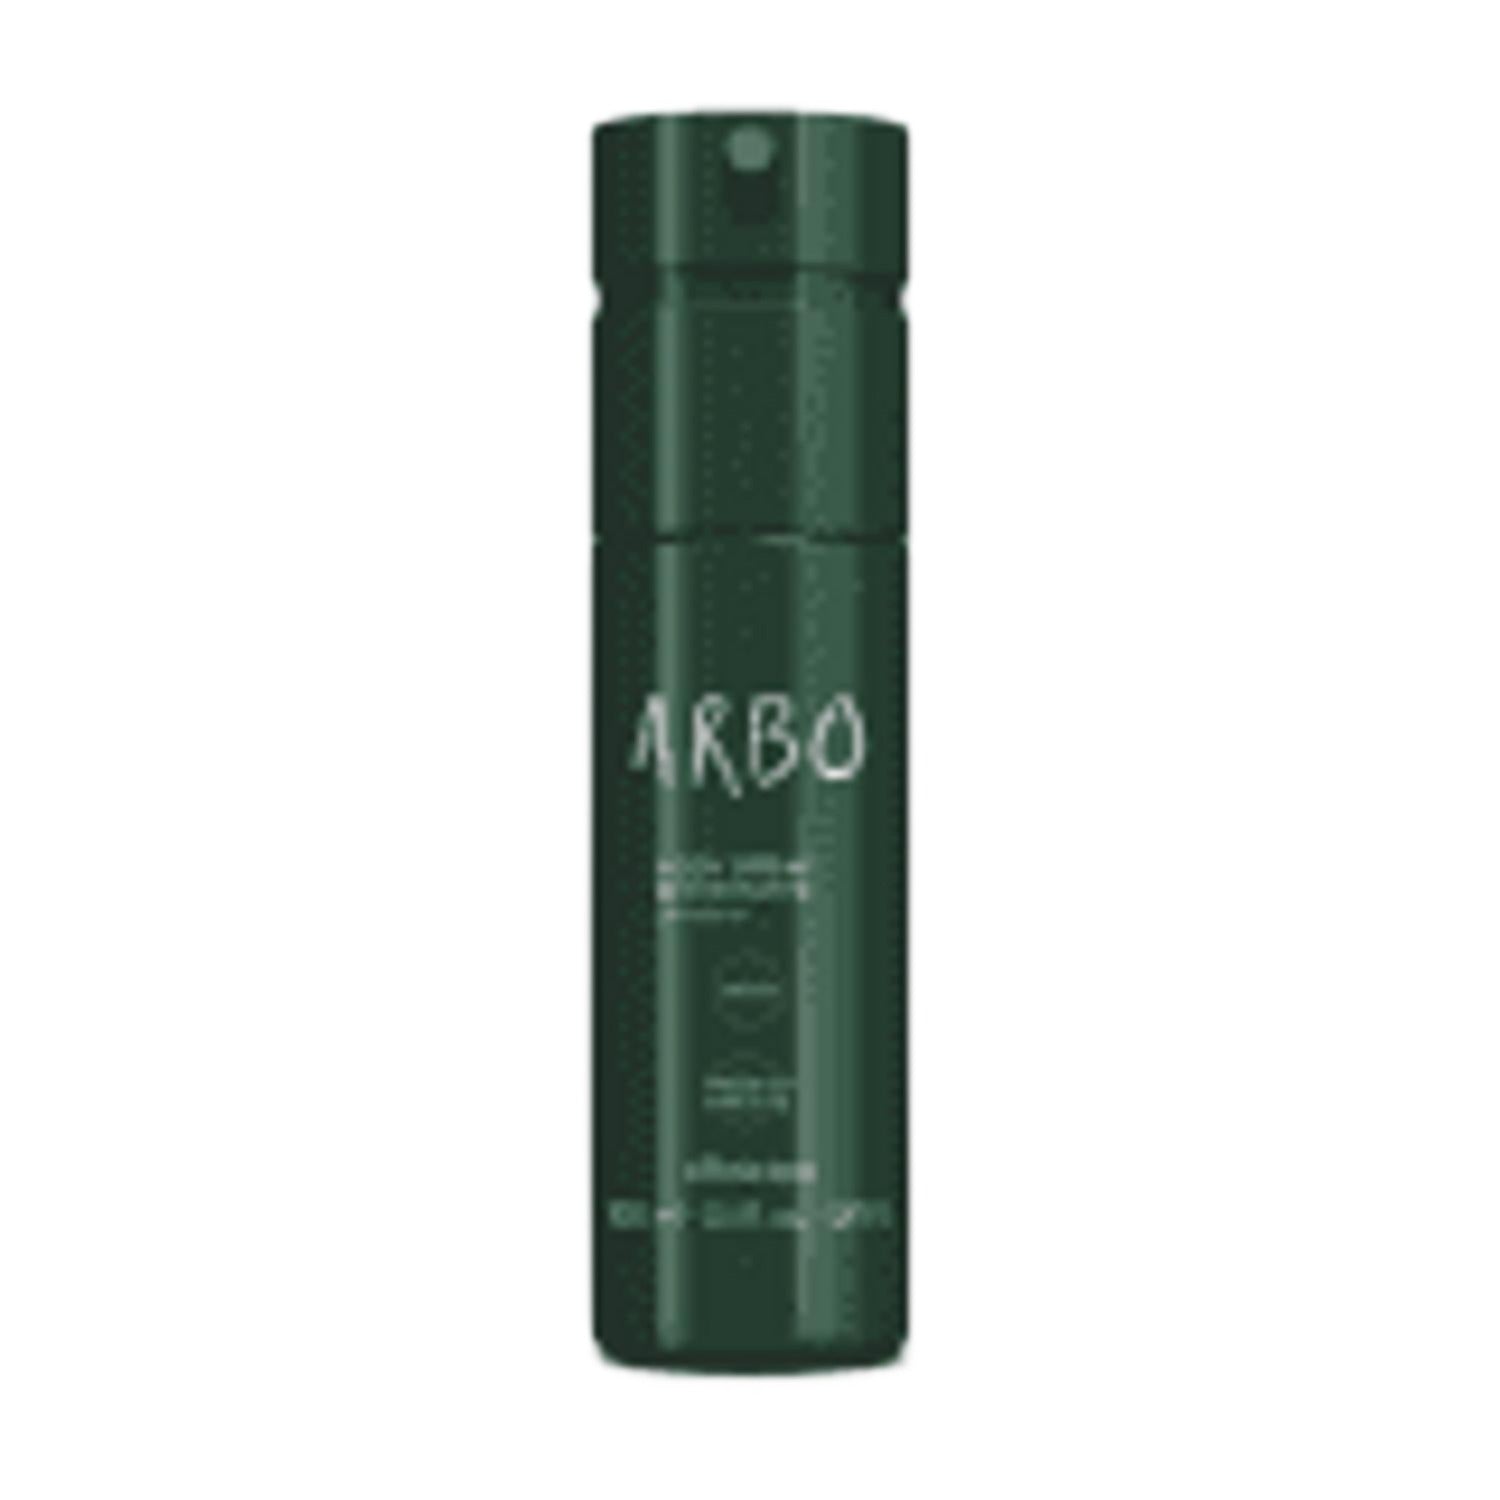 Arbo Body Spray Deodorant, 100 ml